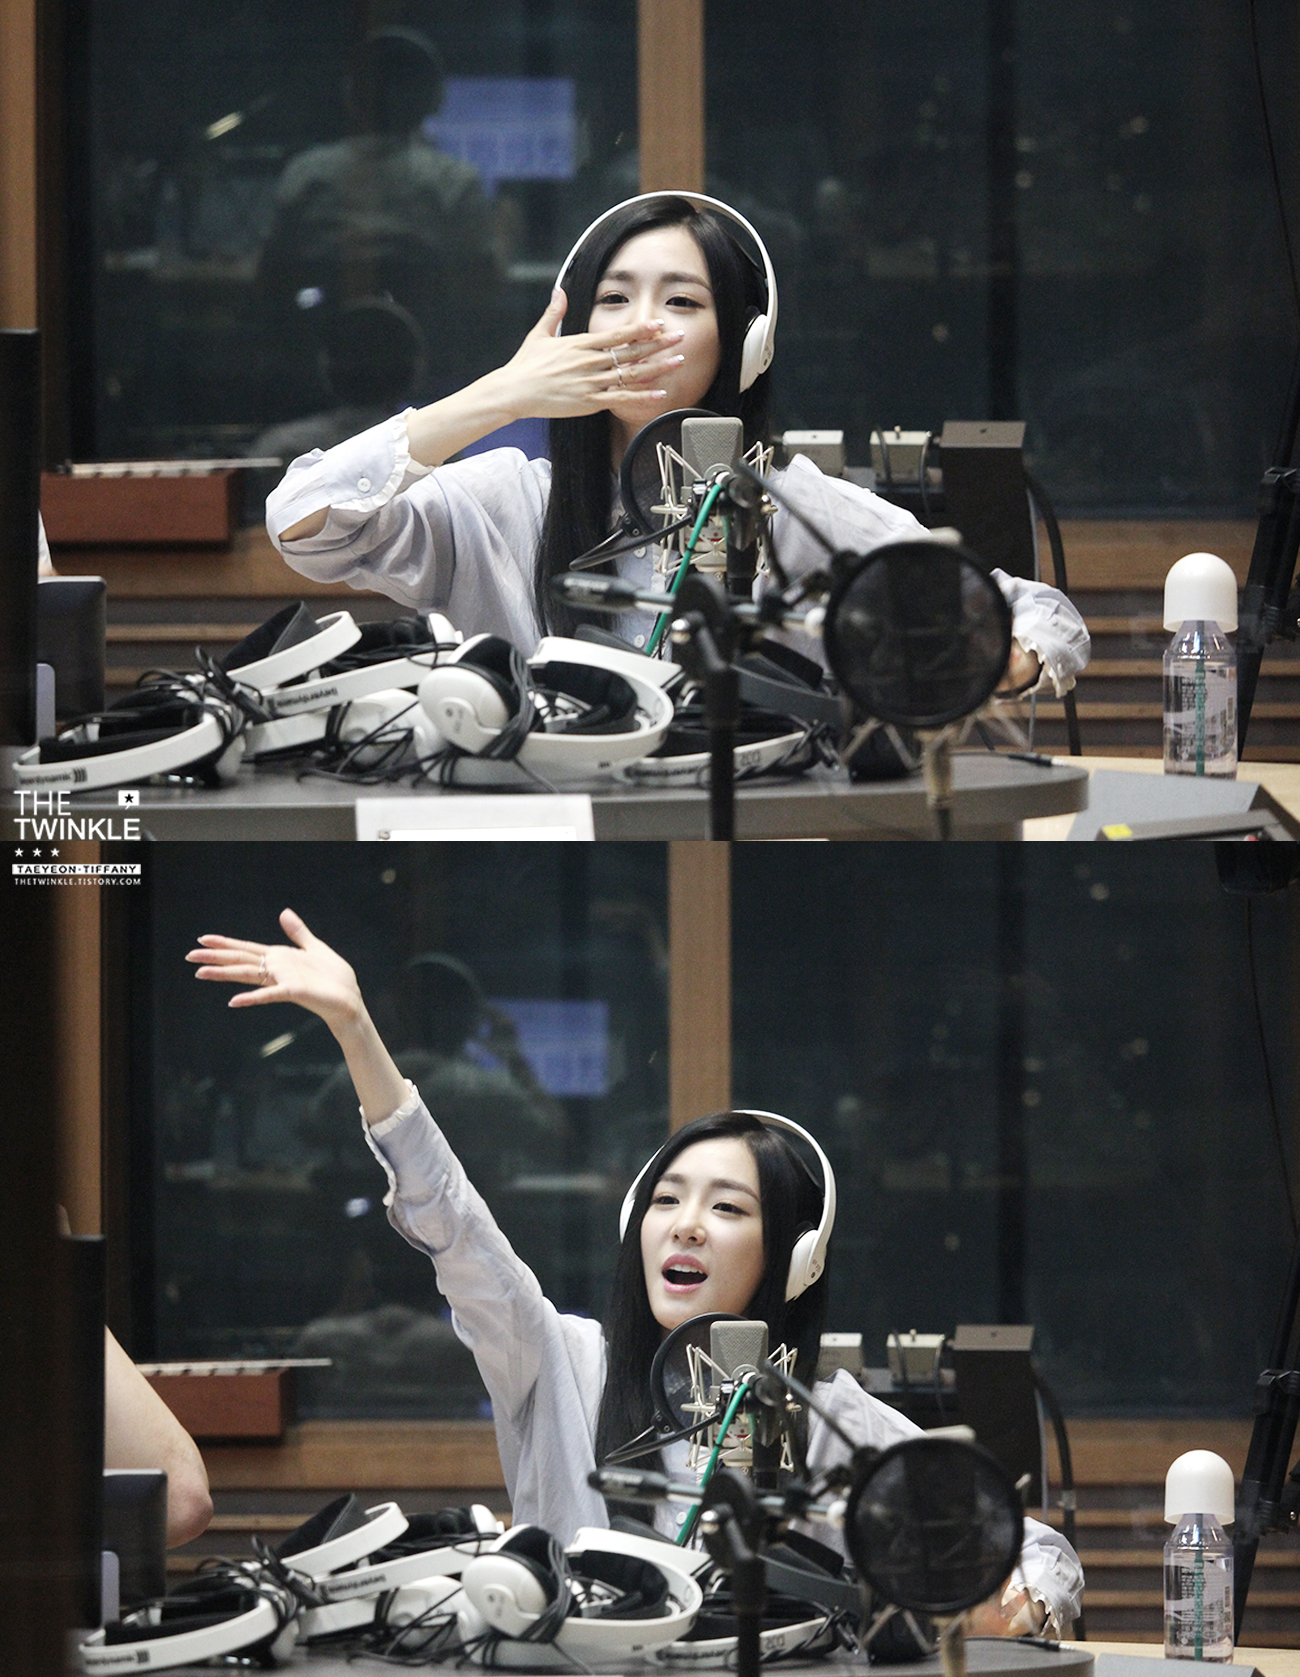 [OTHER][06-02-2015]Hình ảnh mới nhất từ DJ Sunny tại Radio MBC FM4U - "FM Date" - Page 19 257C5436558EB23516E839